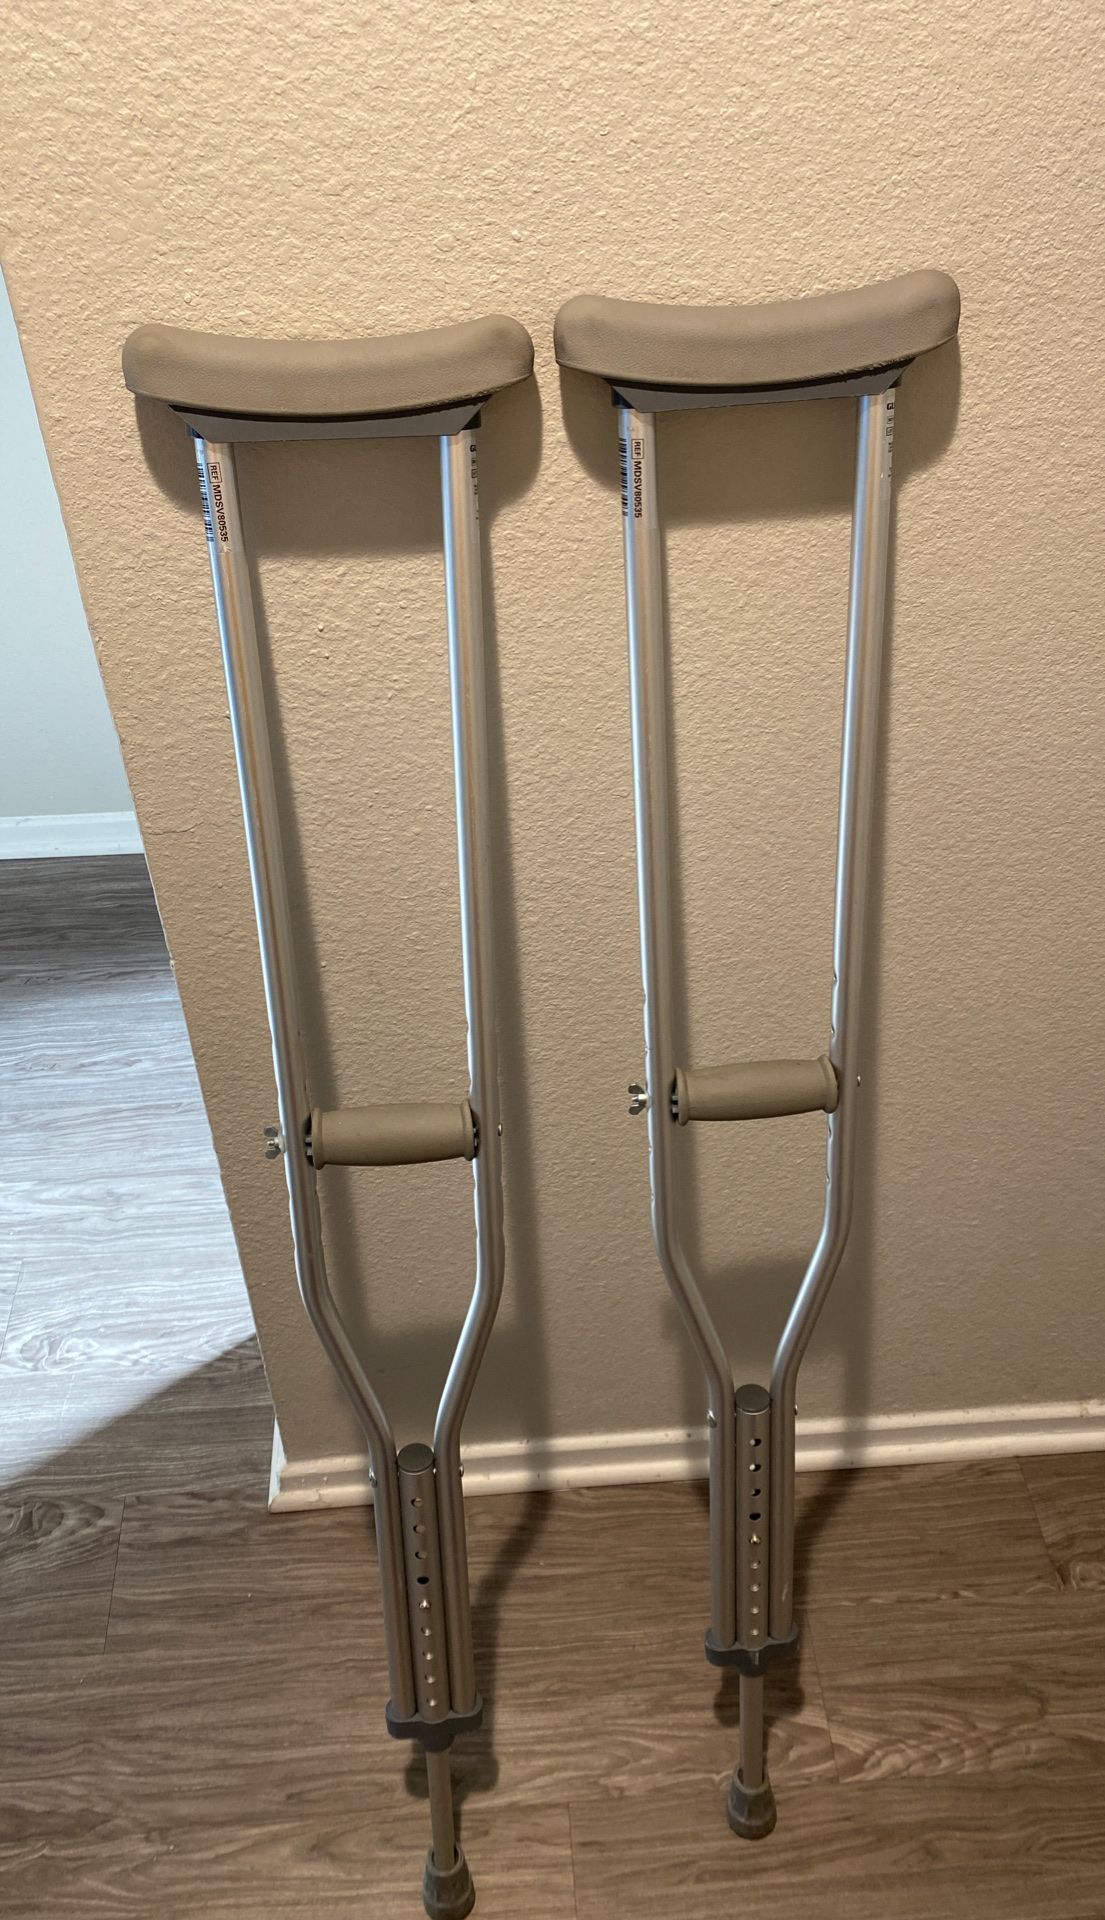 Medline MDSV80535 Standard Aluminum Crutches, 5’2”-5’10” height